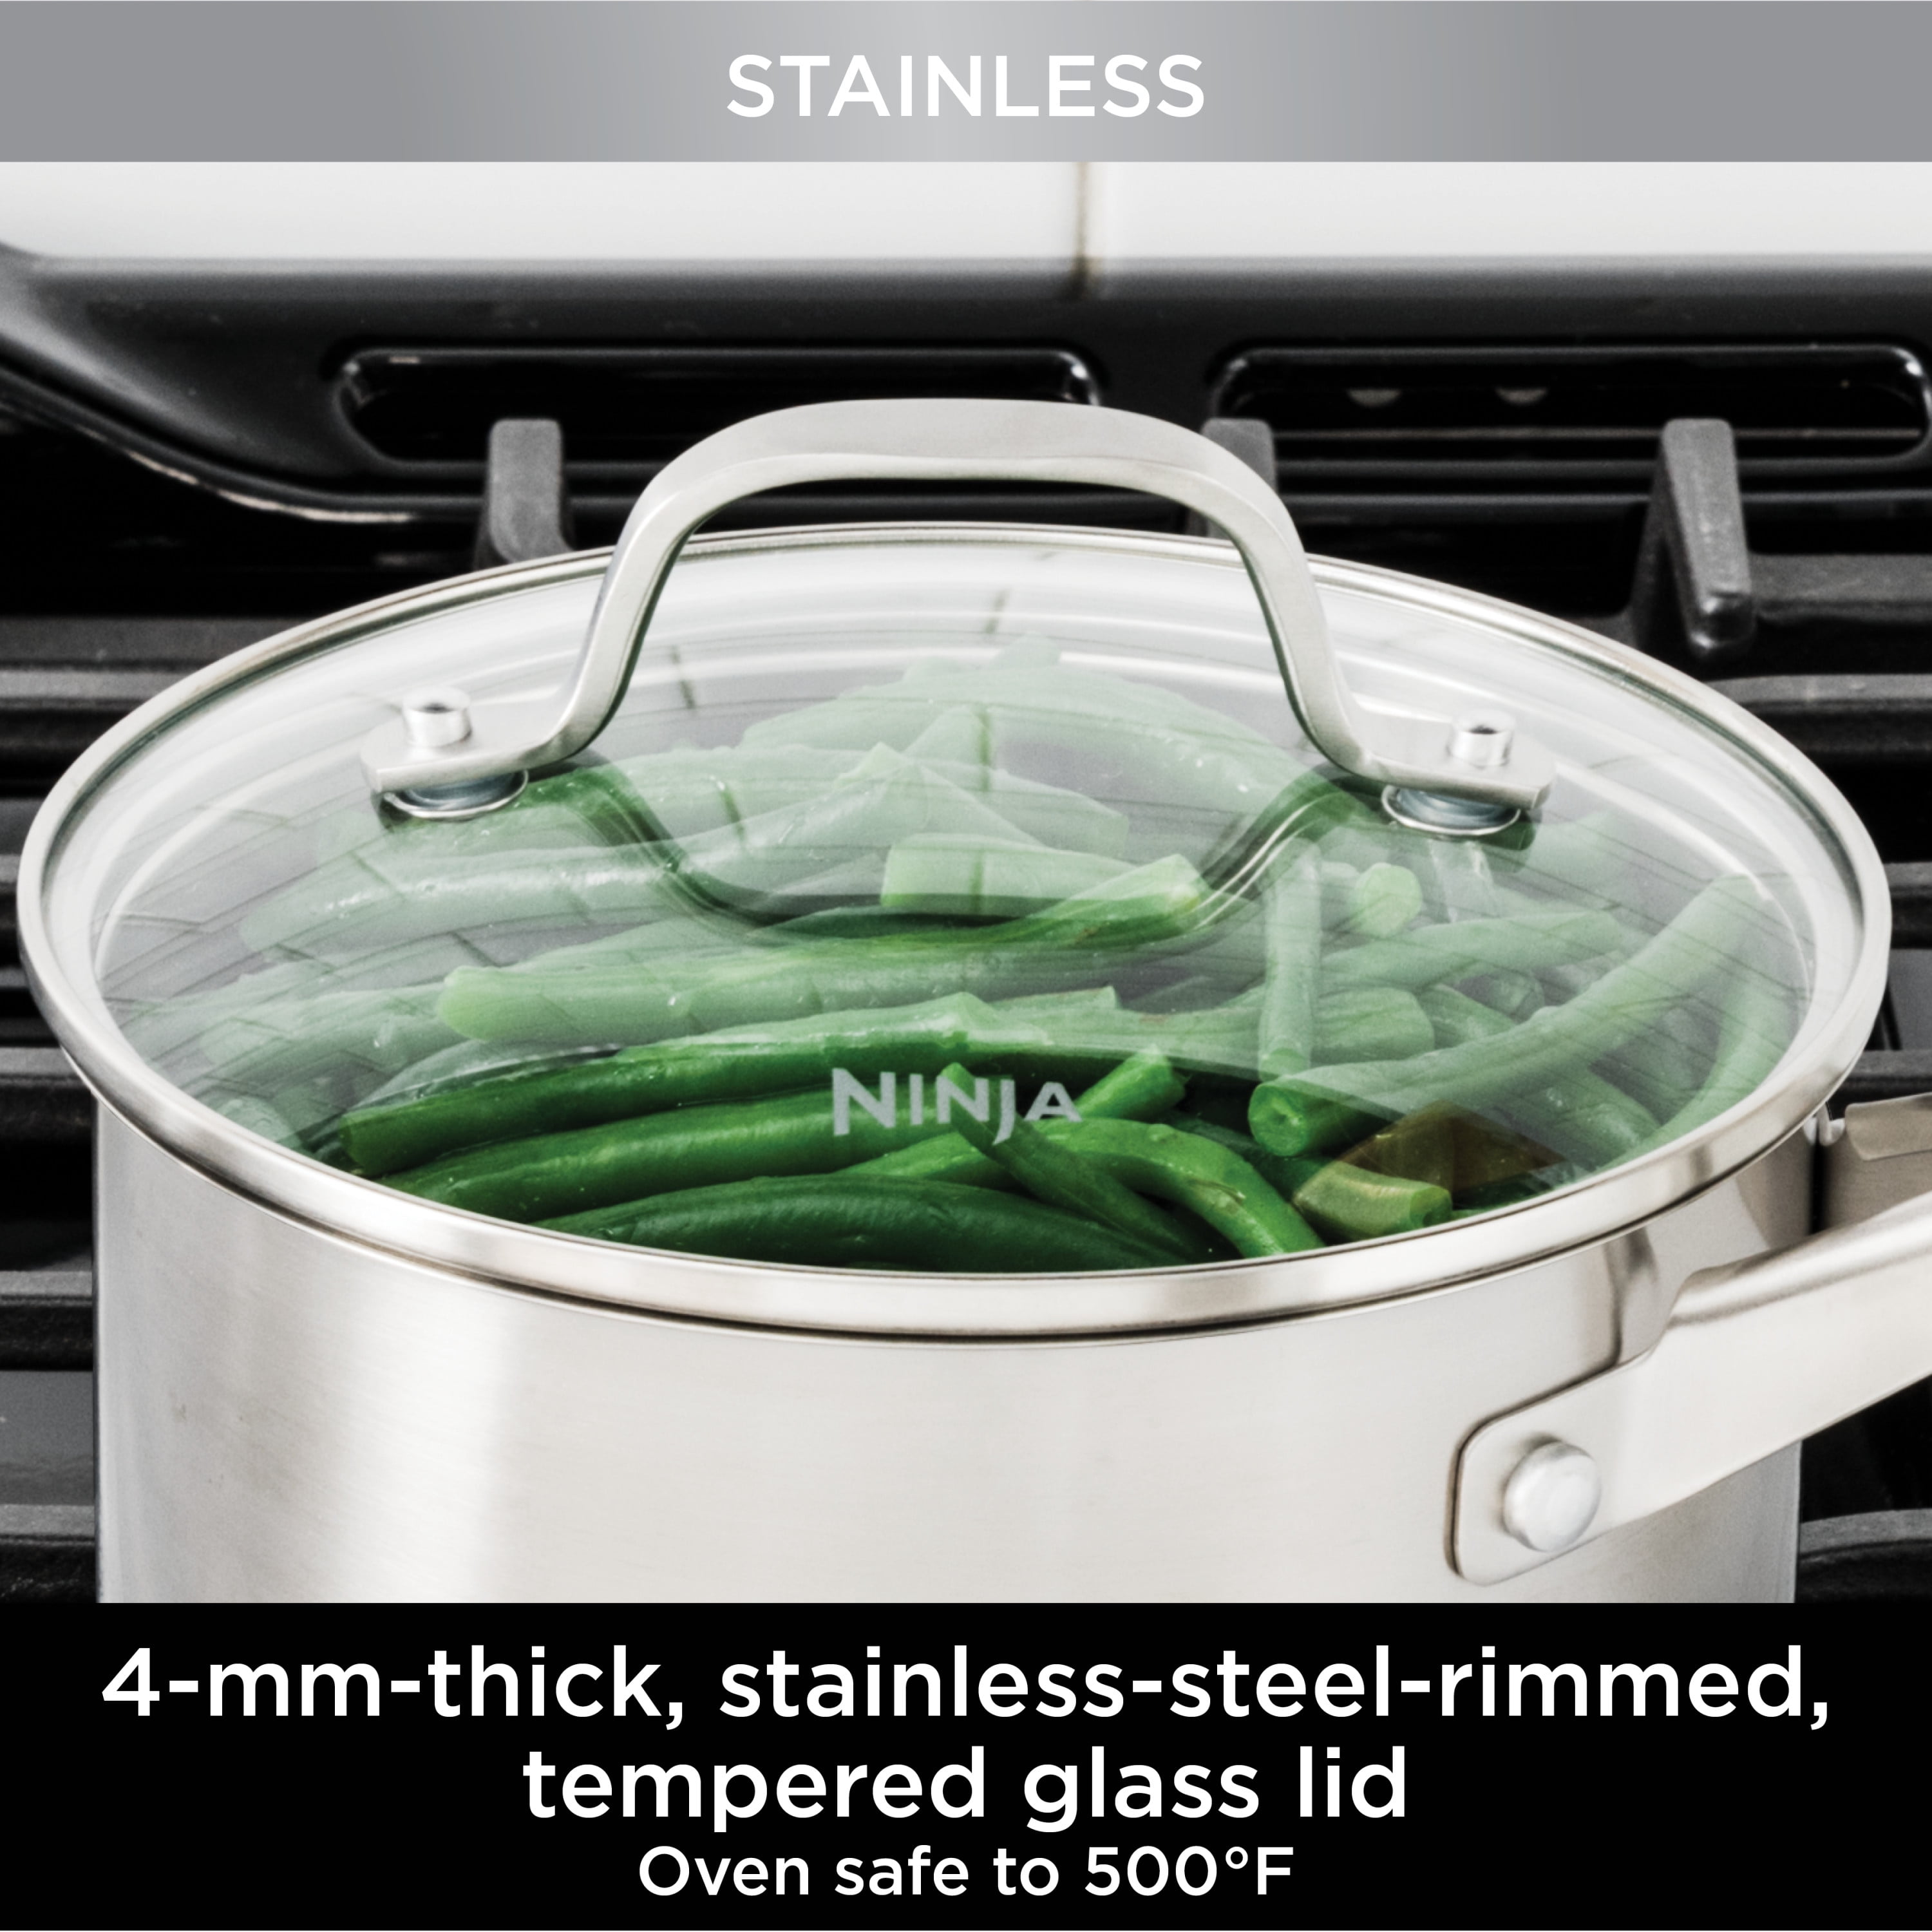 Ninja Foodi Neverstick Essential Stainless 11-Piece Cookware Set